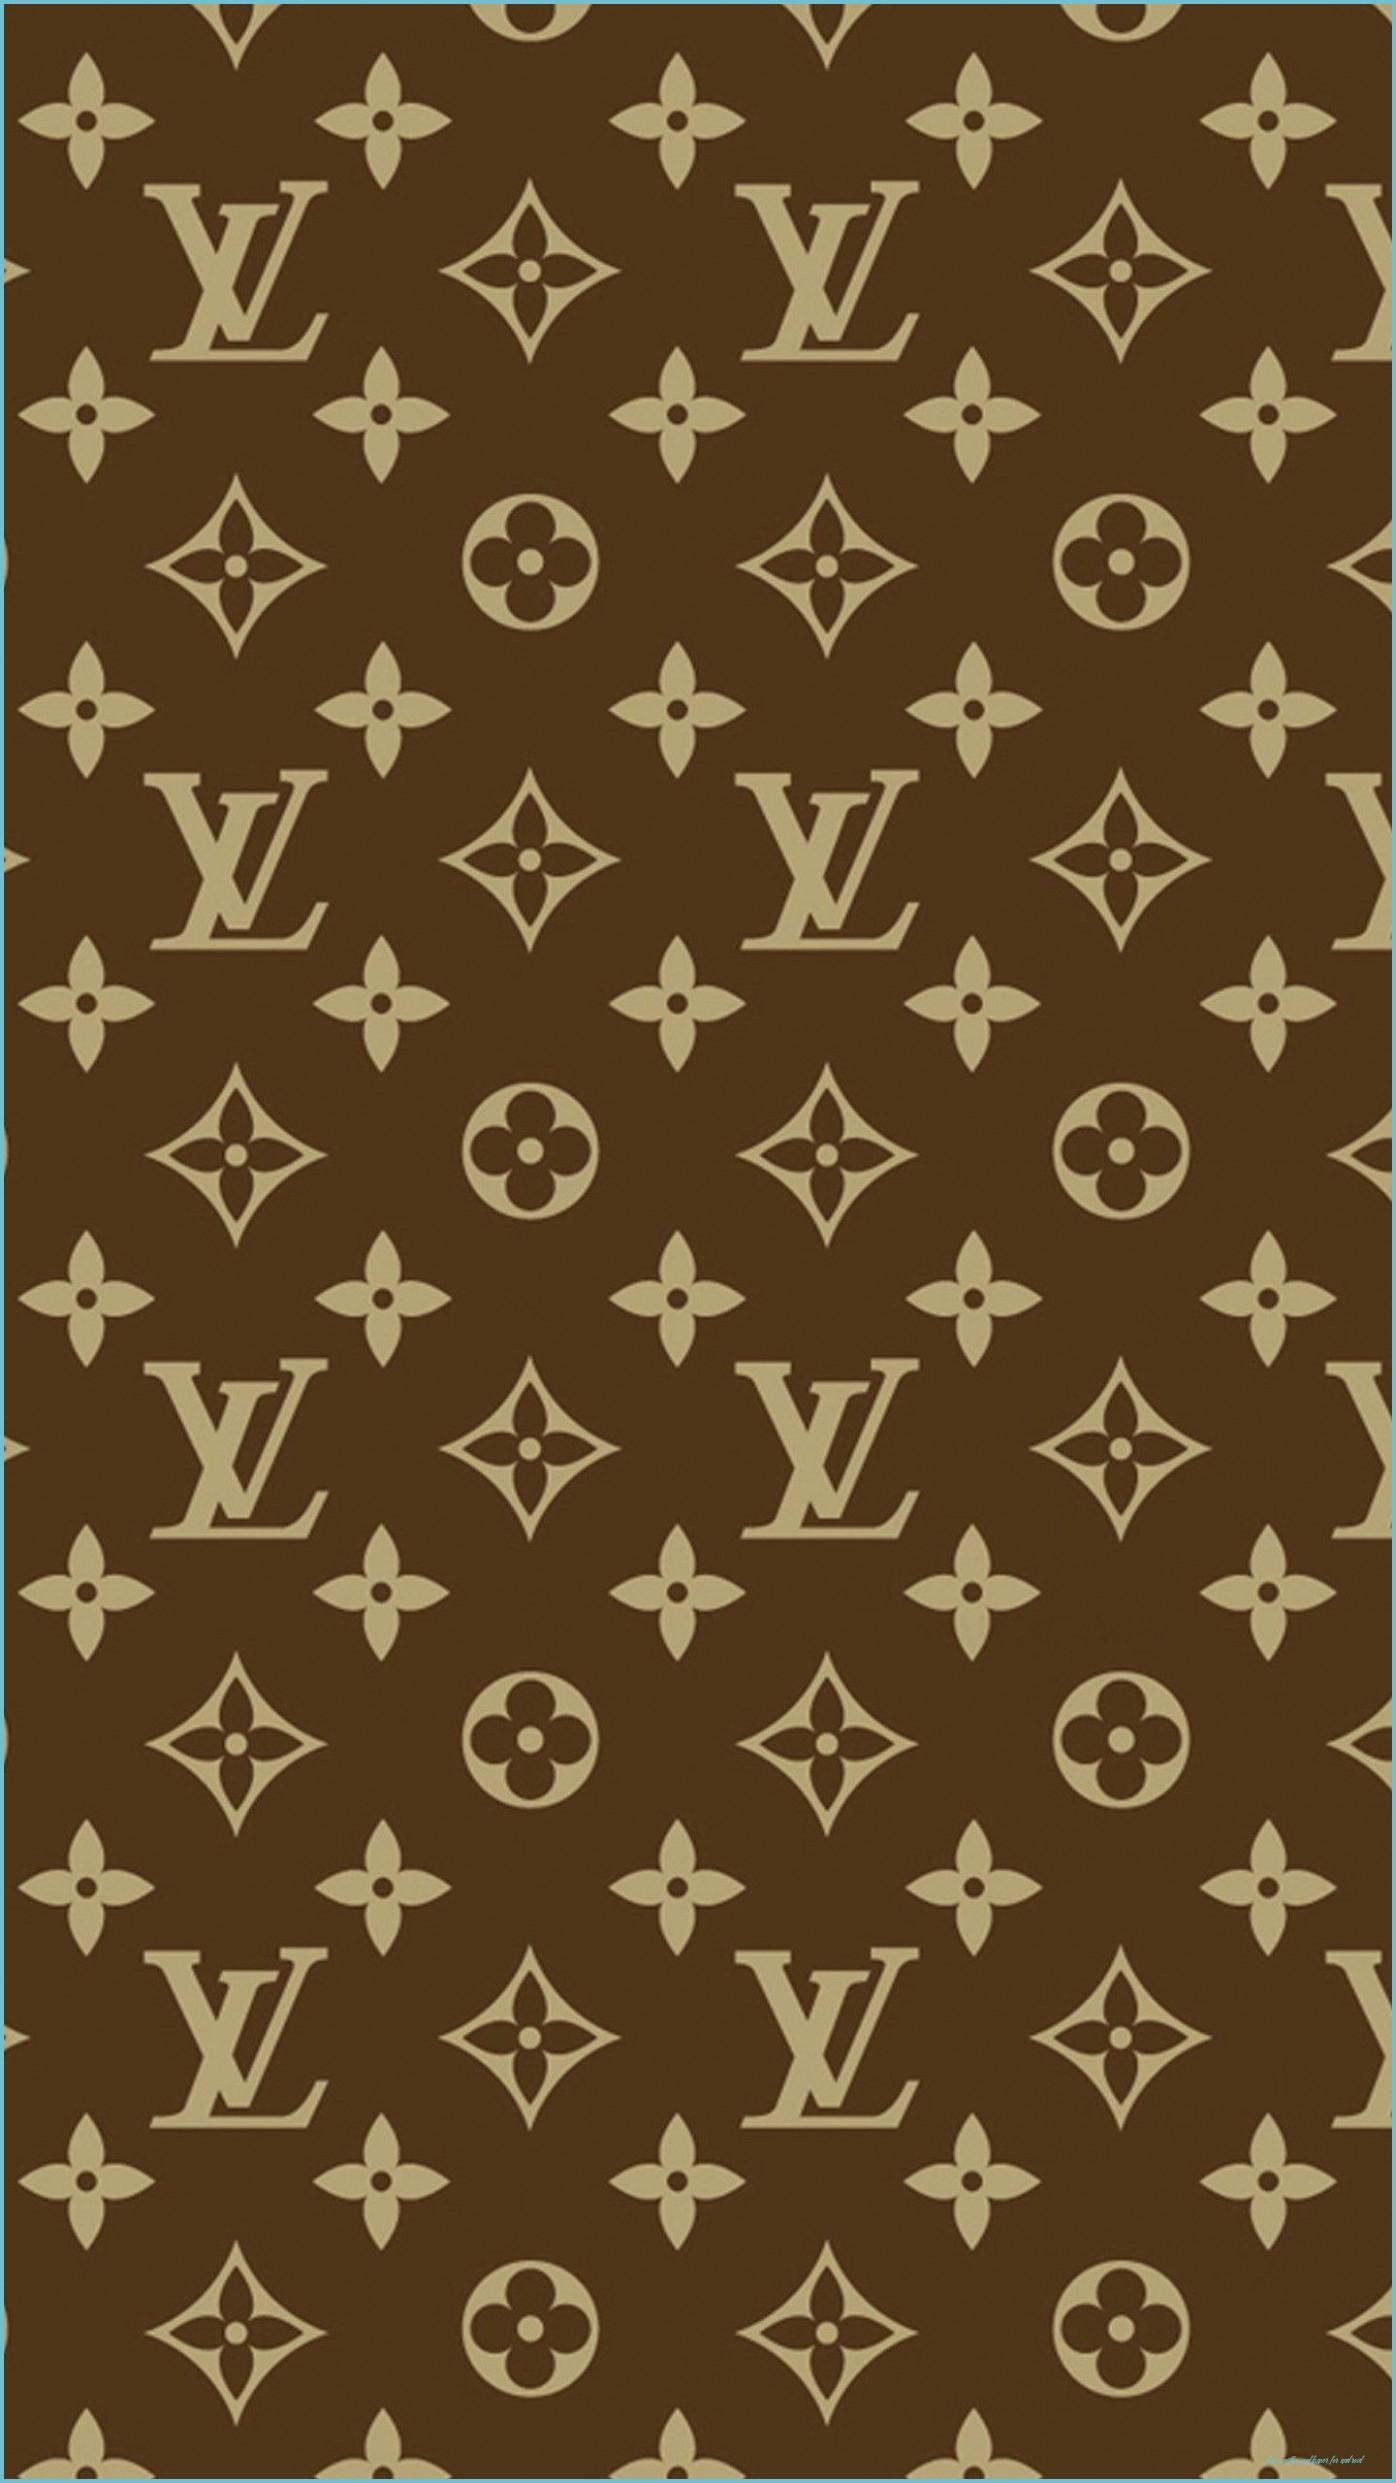 Louis Vuitton Wallpaper Phone - Wallpaperforu